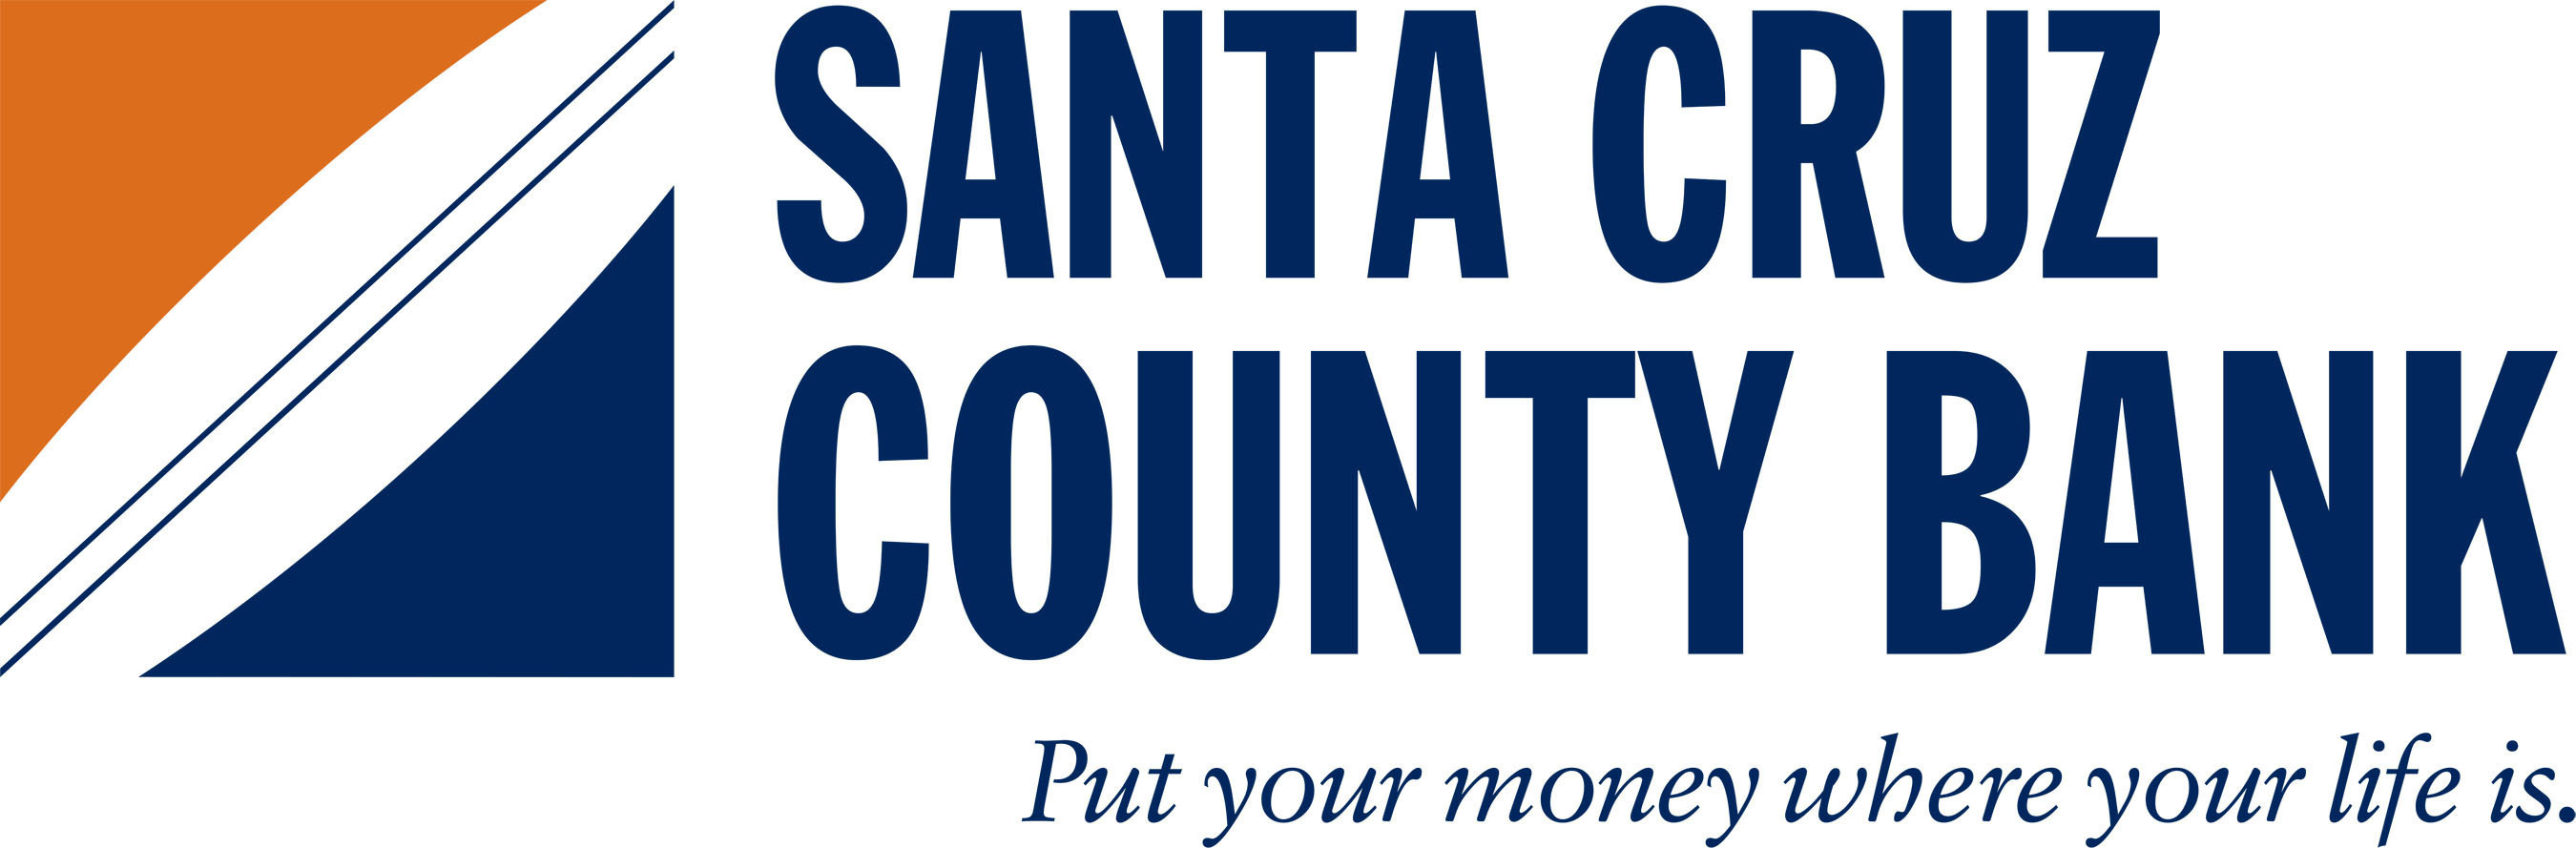 Santa Cruz County Bank logo.